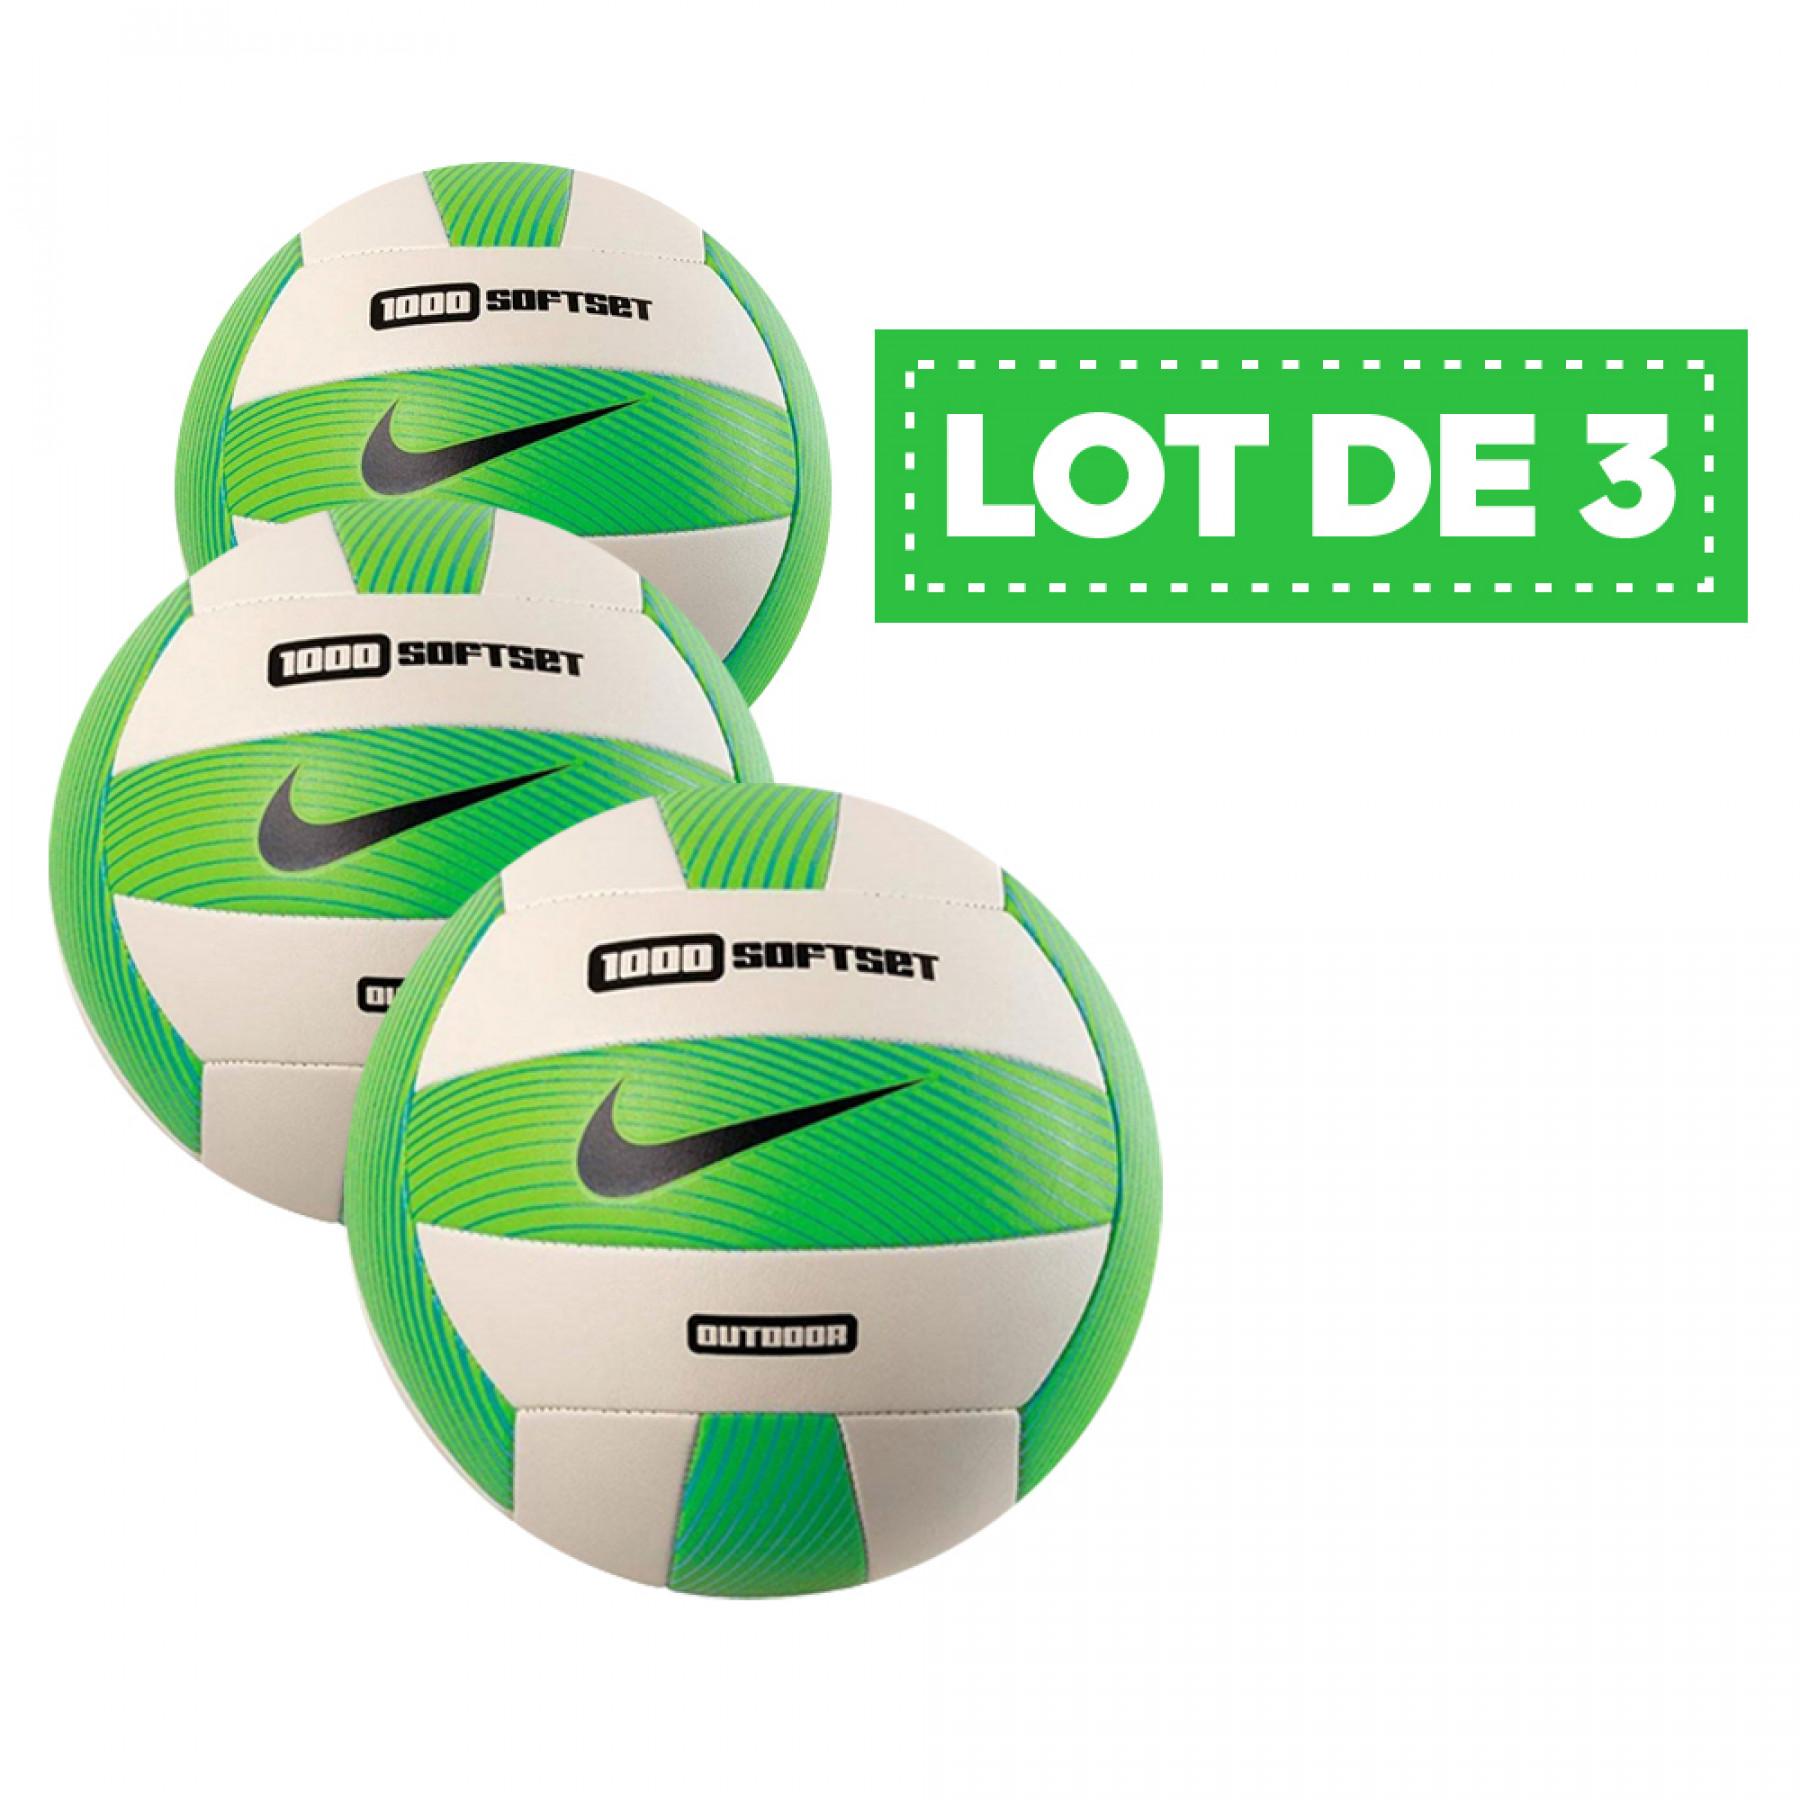 Zestaw 3 balonów Nike 1000 softset outdoor vert/blanc